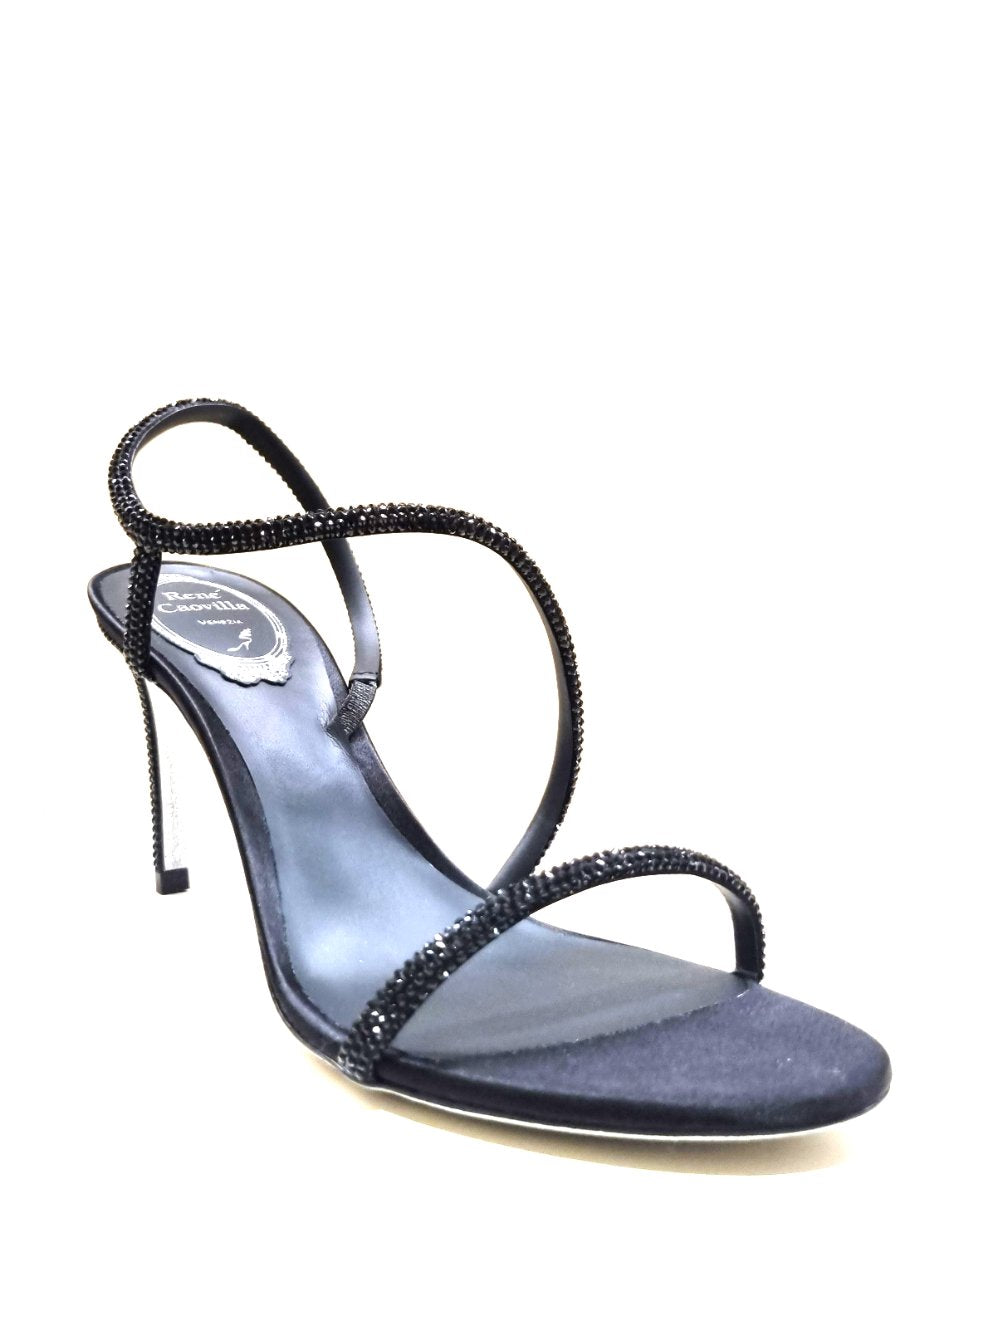 Irini Black Strass Sandals - Rene Caovilla - Liberty Shoes Australia